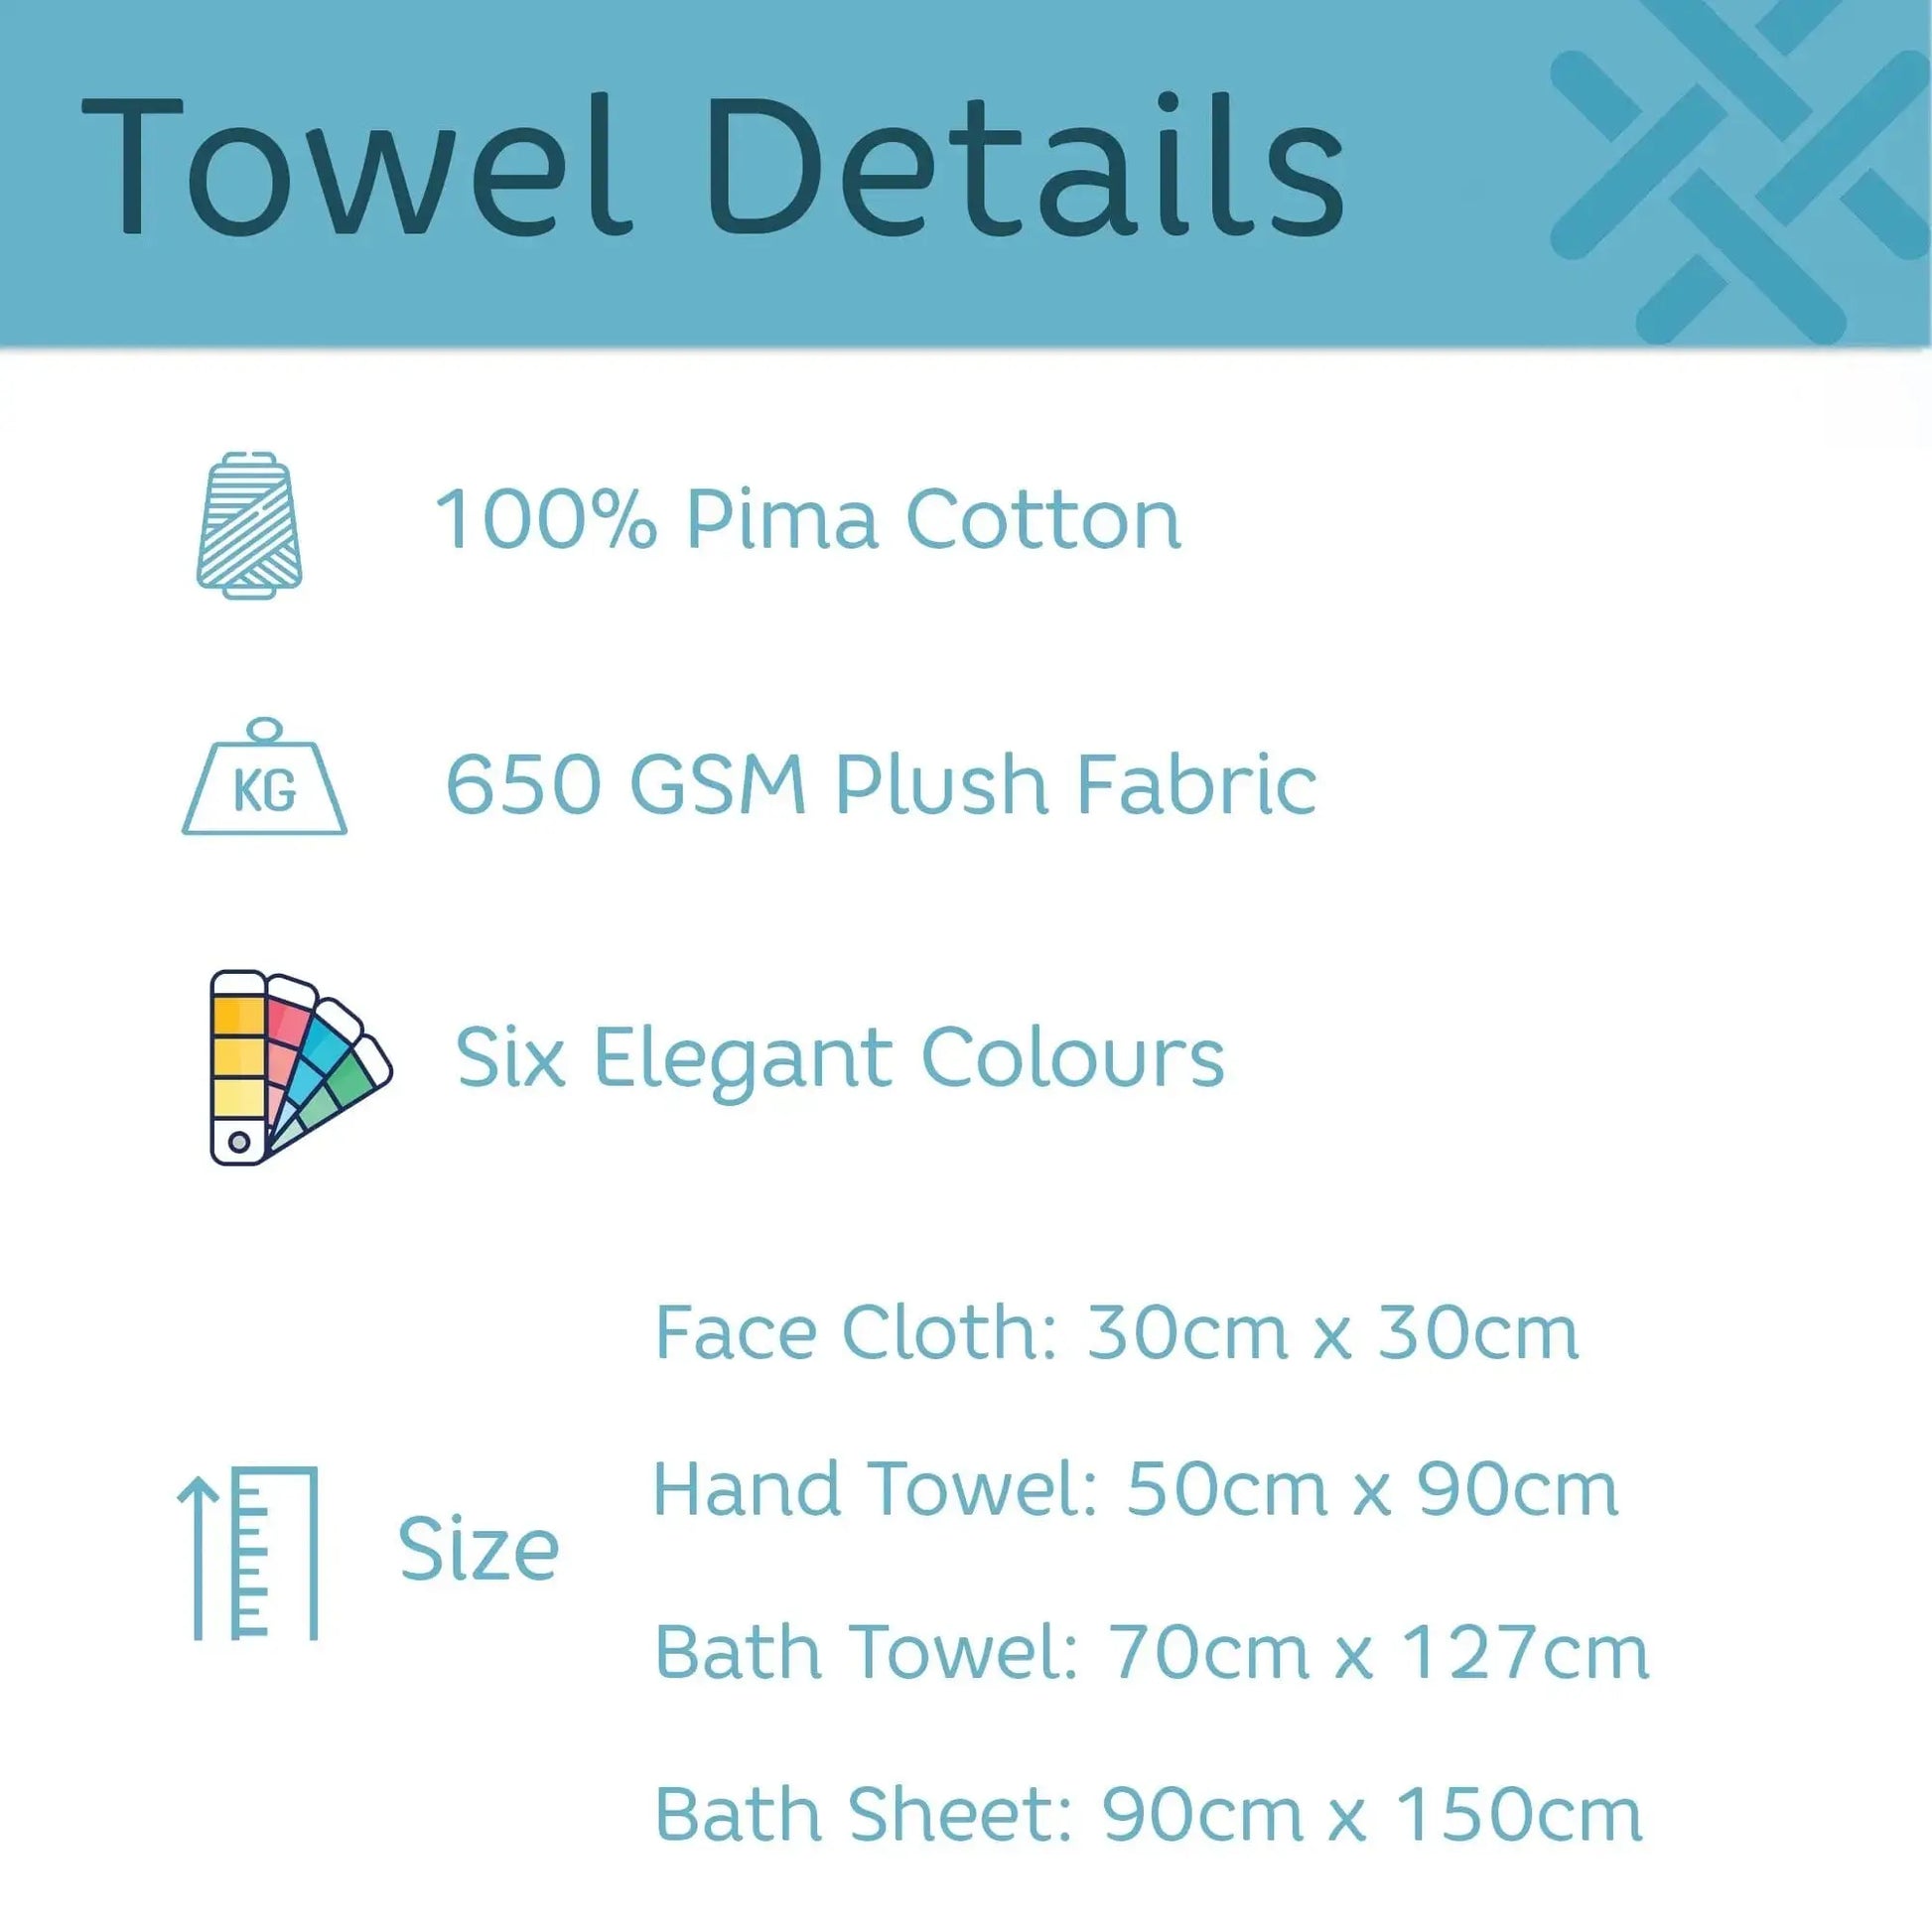 Towel details infographic